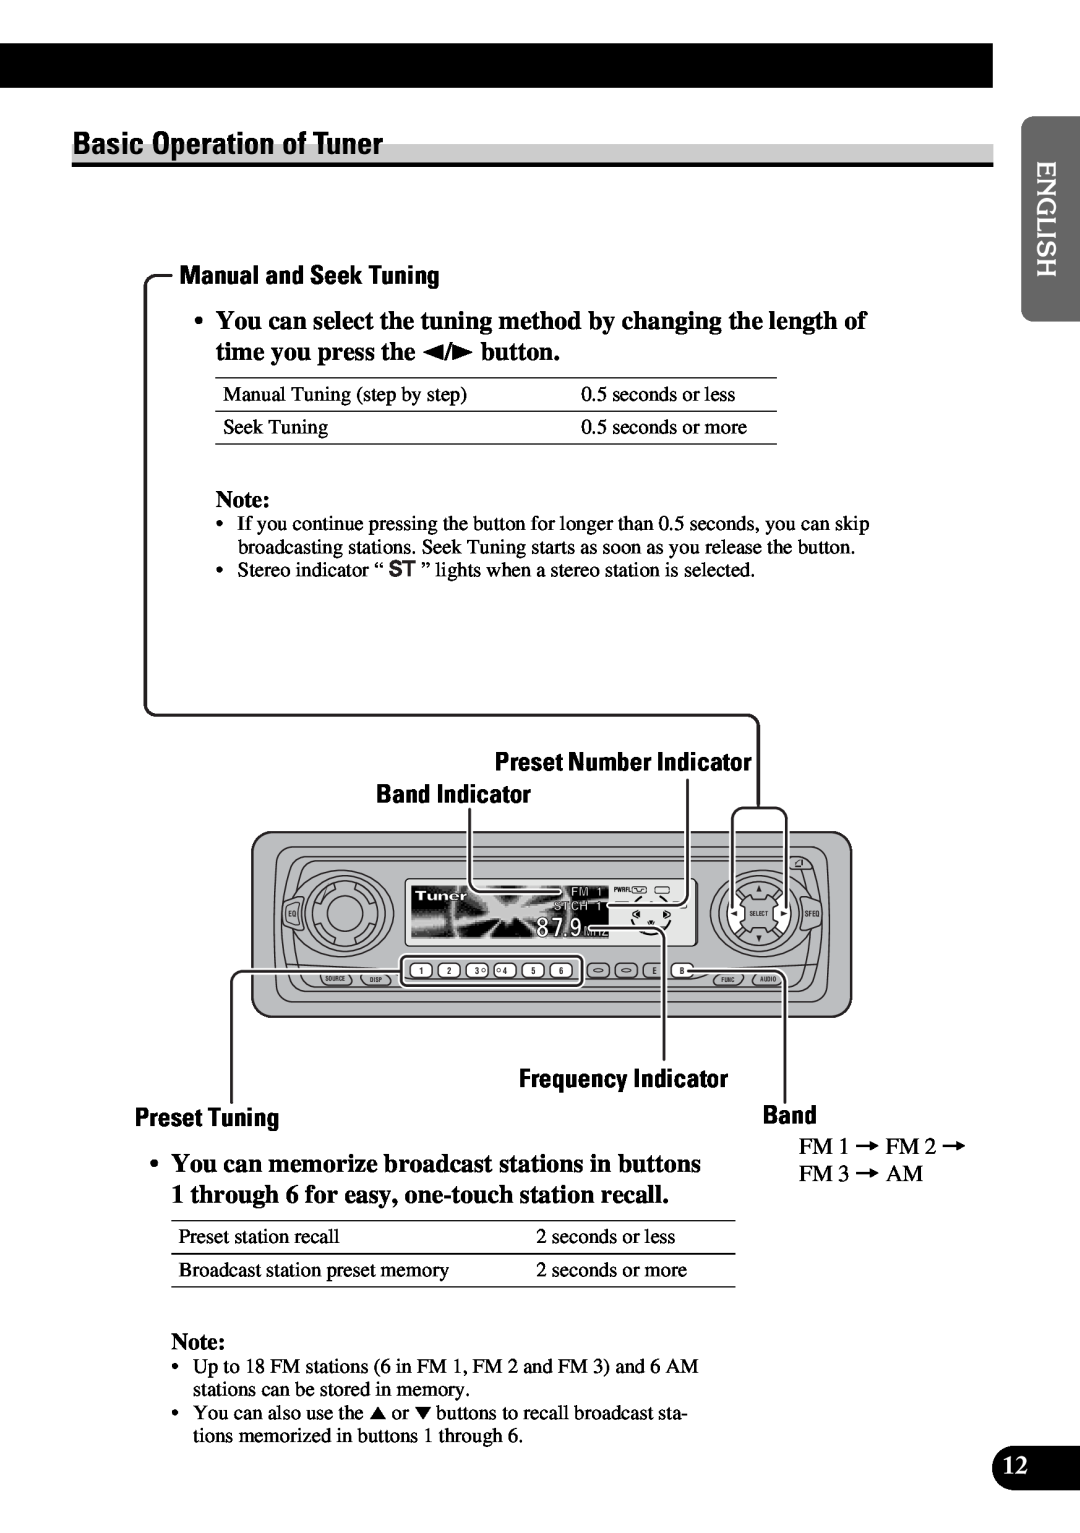 Pioneer DEH-P6300 Basic Operation of Tuner, Manual and Seek Tuning, Preset Number Indicator Band Indicator, Preset Tuning 